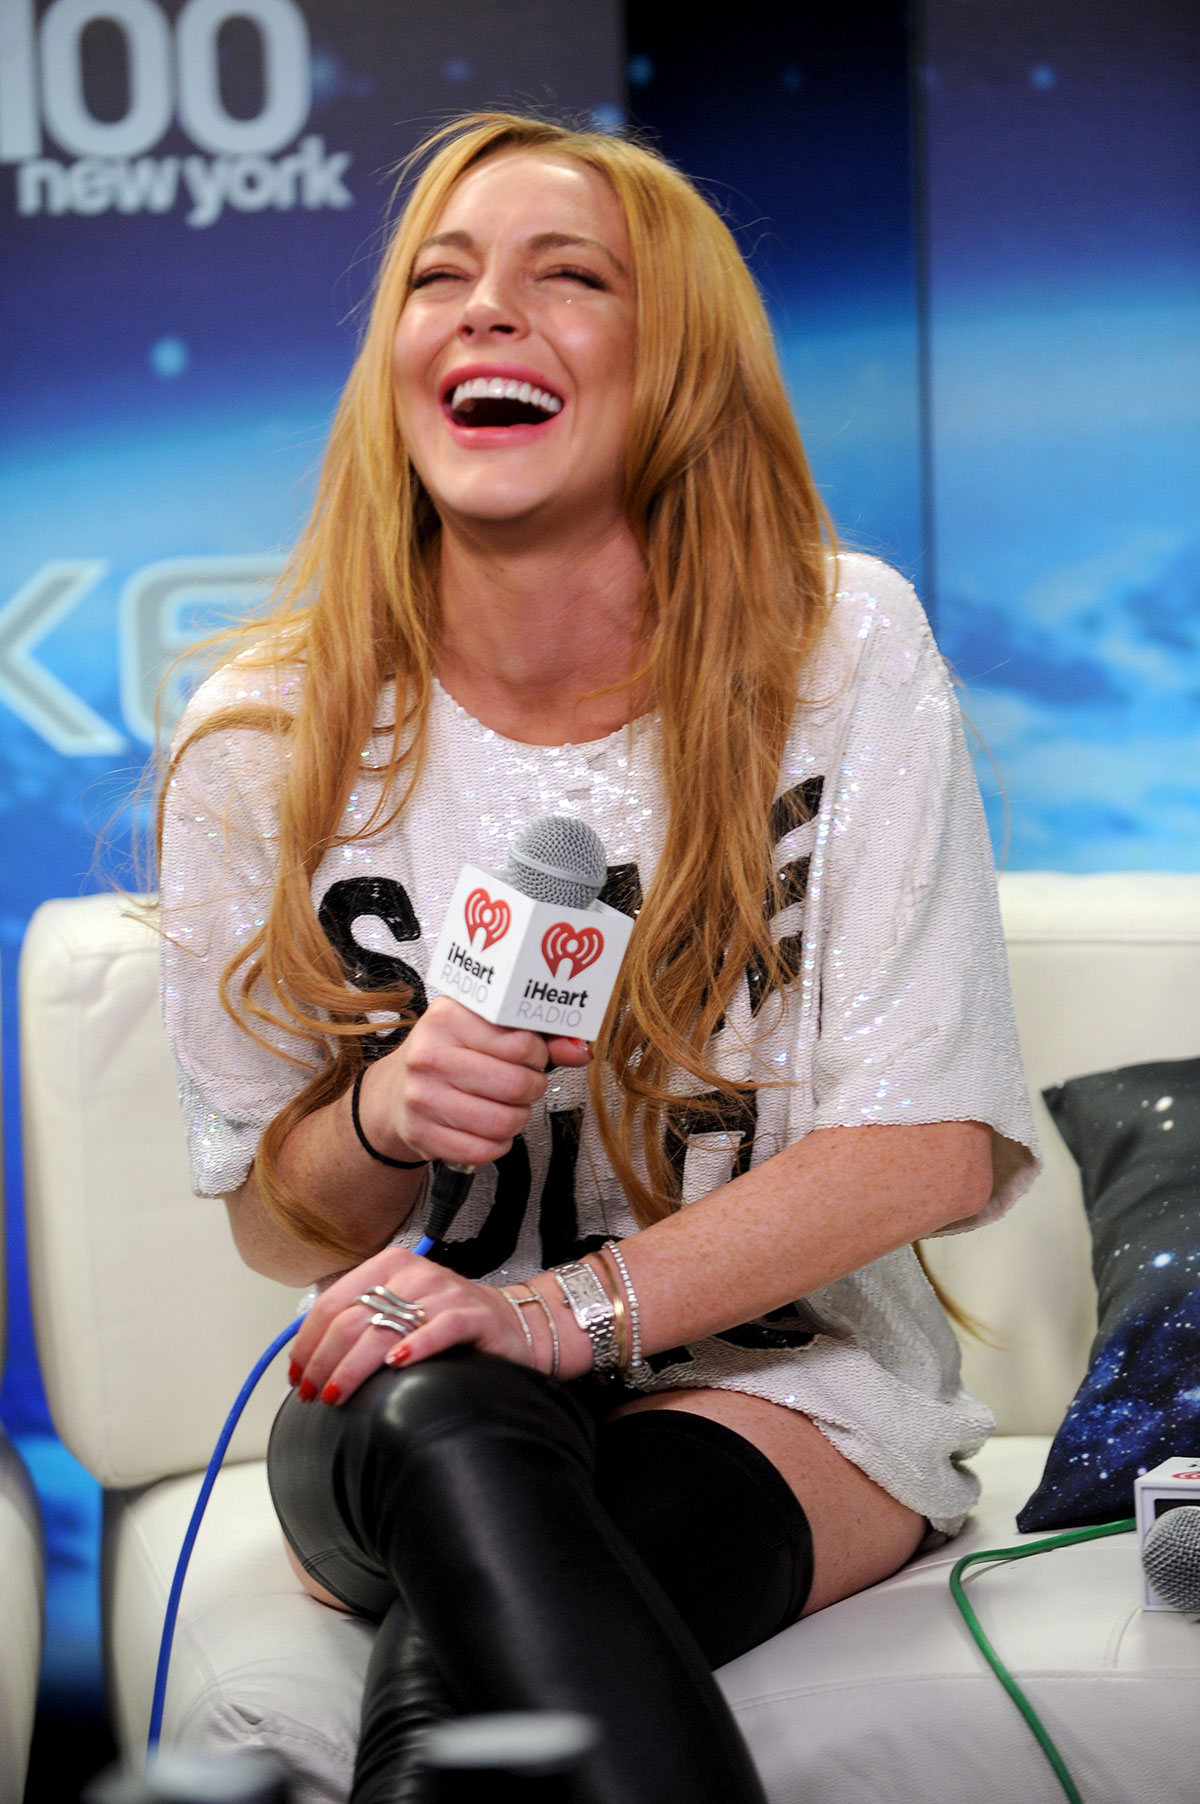 Lindsay Lohan attends Z100 Jingle Ball 2013